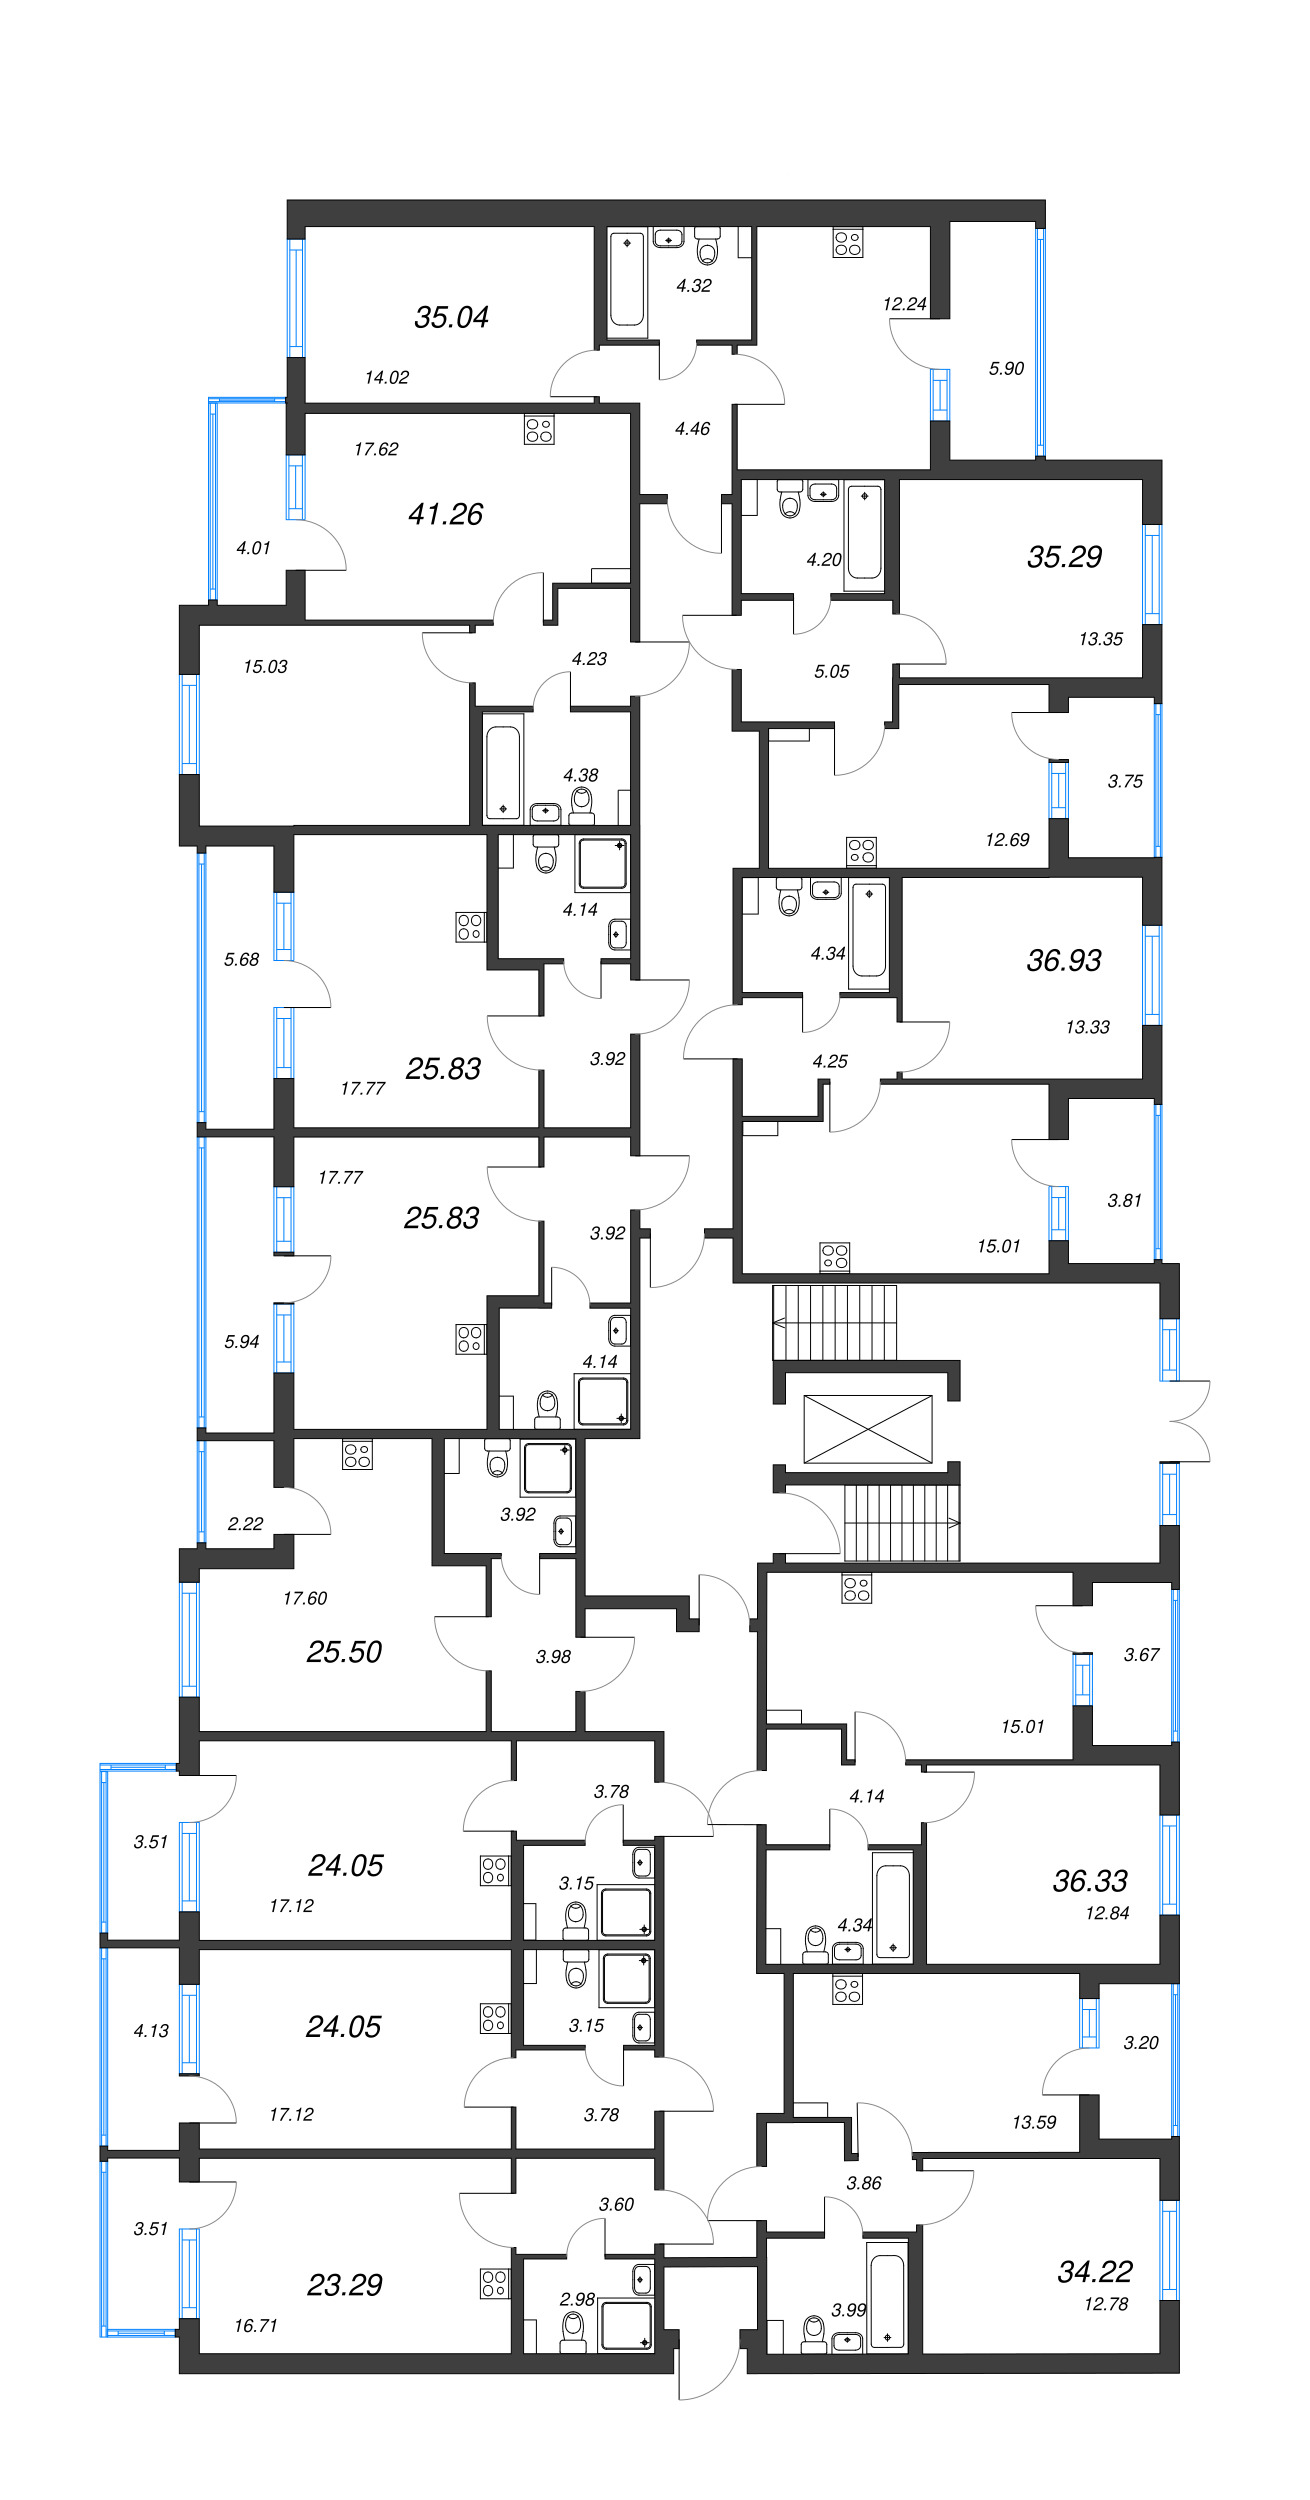 2-комнатная (Евро) квартира, 36.93 м² - планировка этажа